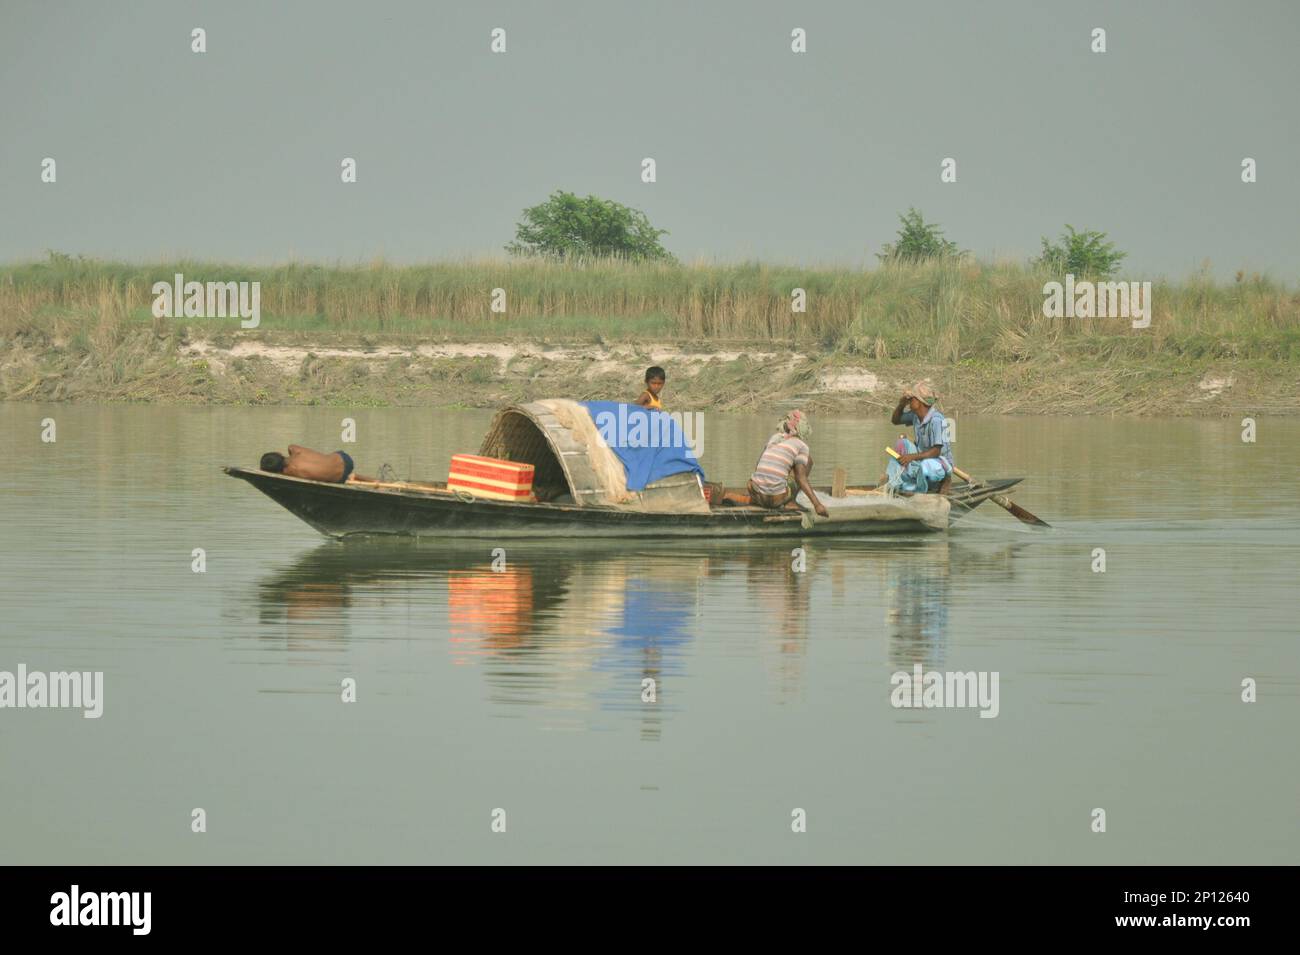 Rural side boat on the river scene in Bangladesh. Stock Photo